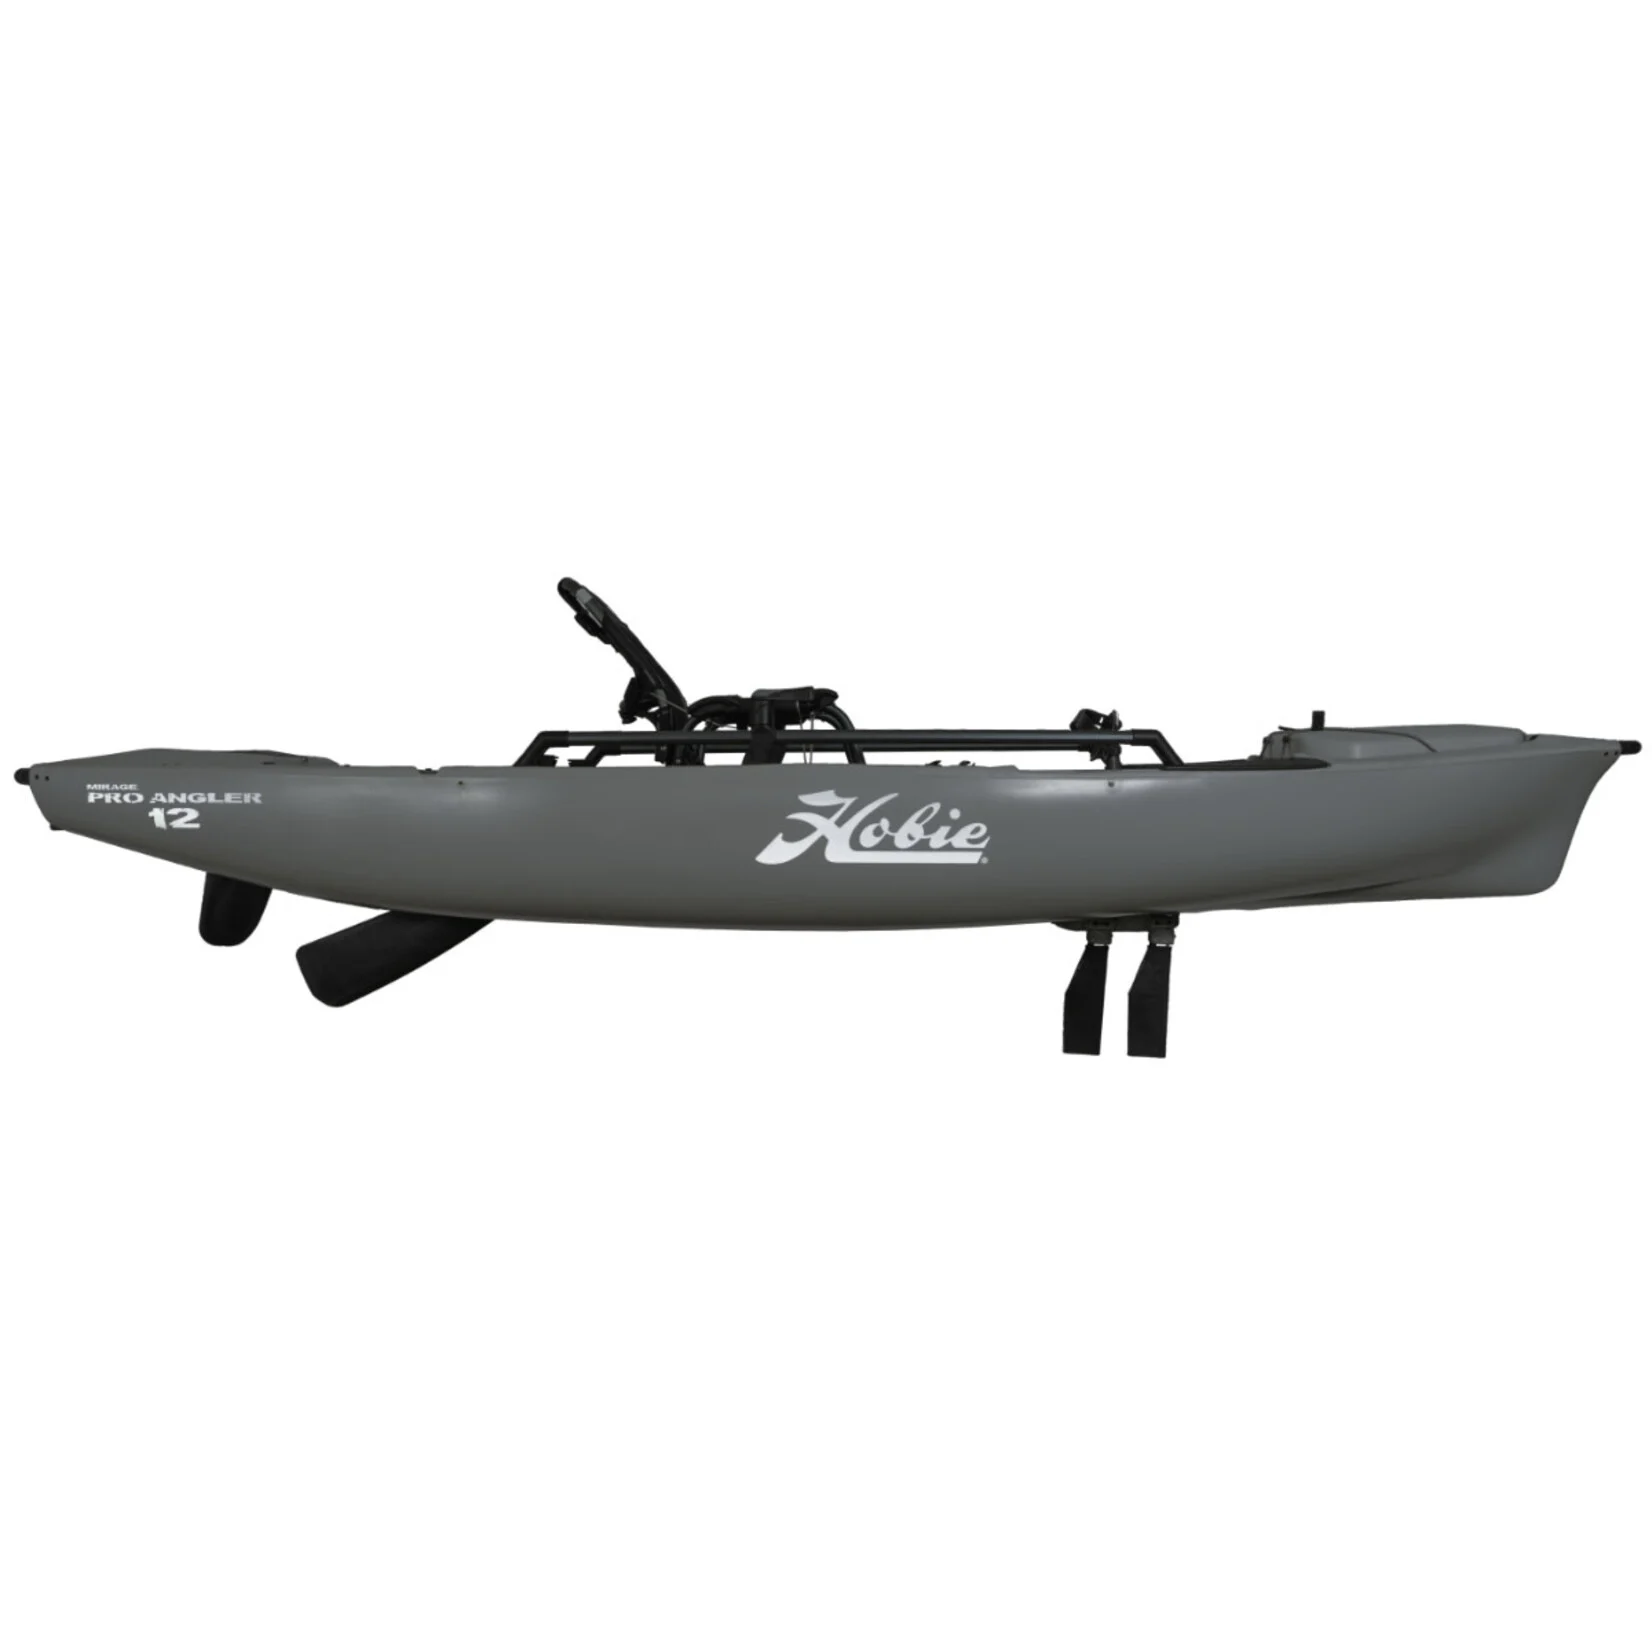 Hobie Pro Angler 12 fishing kayak side profile. Colour; Battleship Grey